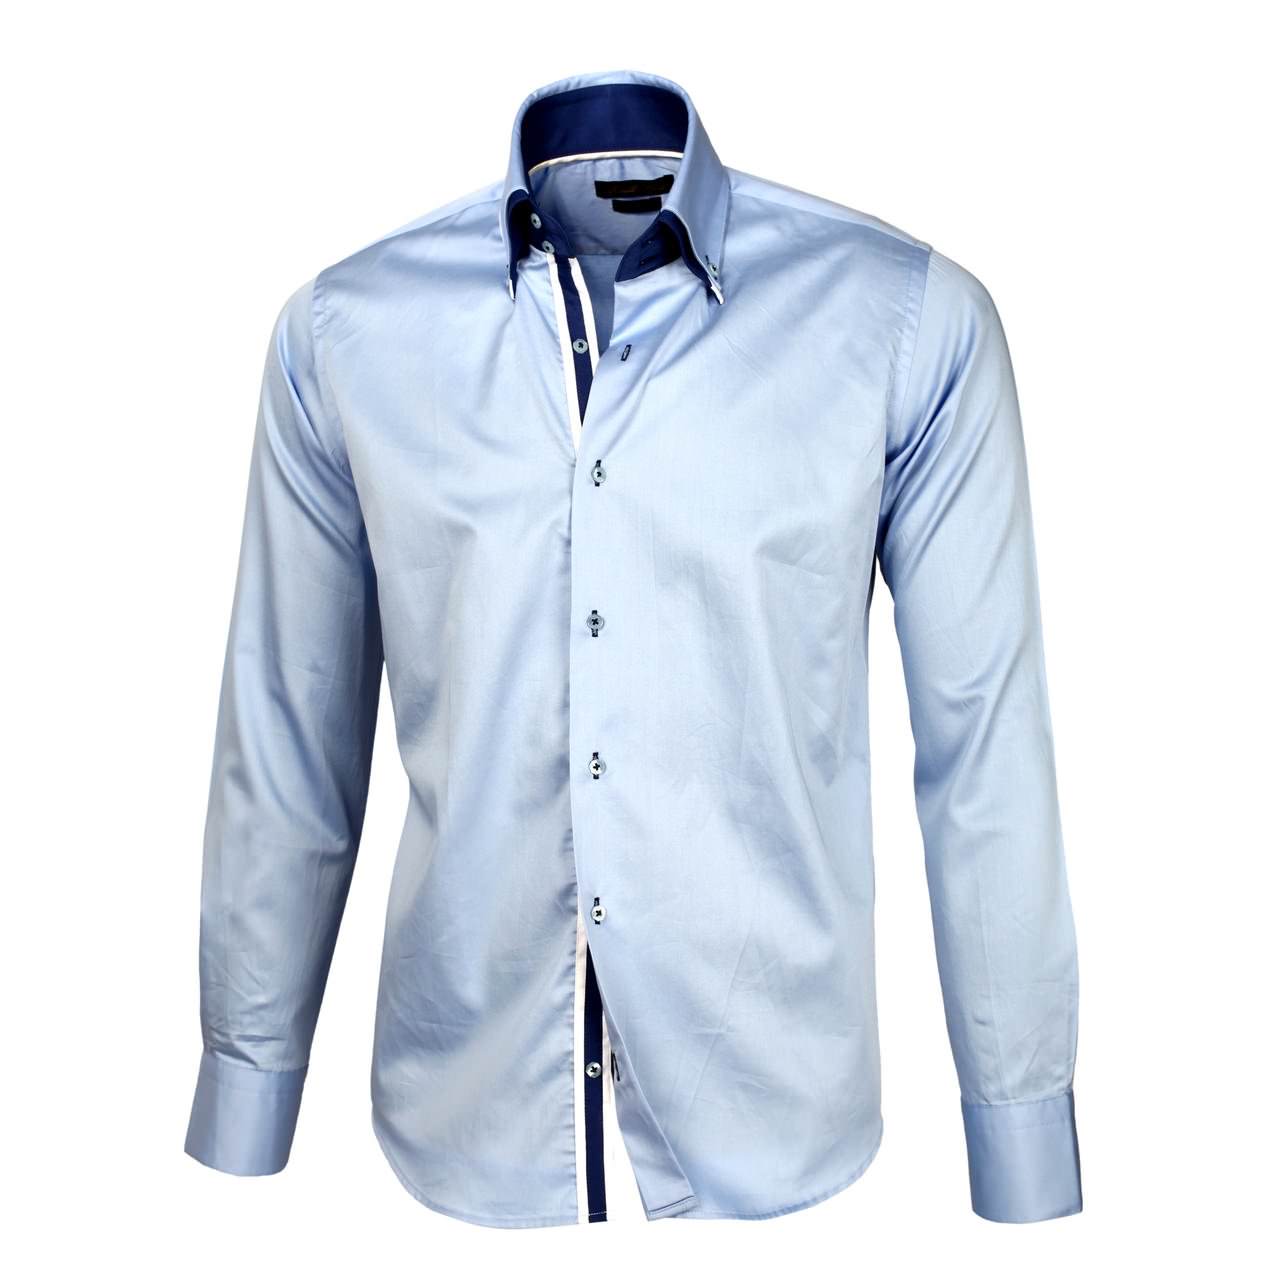 Flourish Hengchang highshirt мужская рубашка